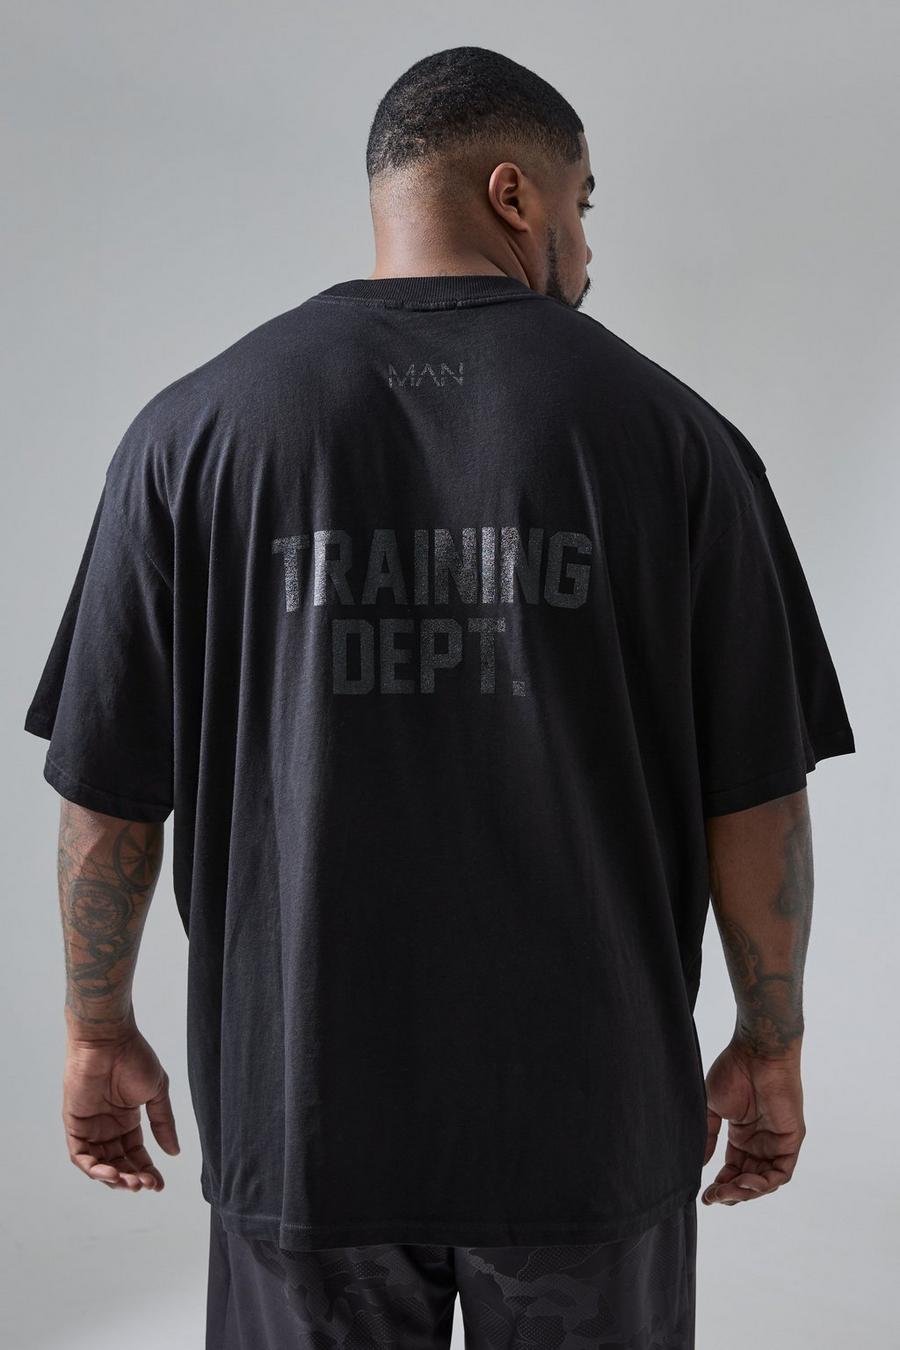 Camiseta Plus oversize Active Training Dept, Black image number 1